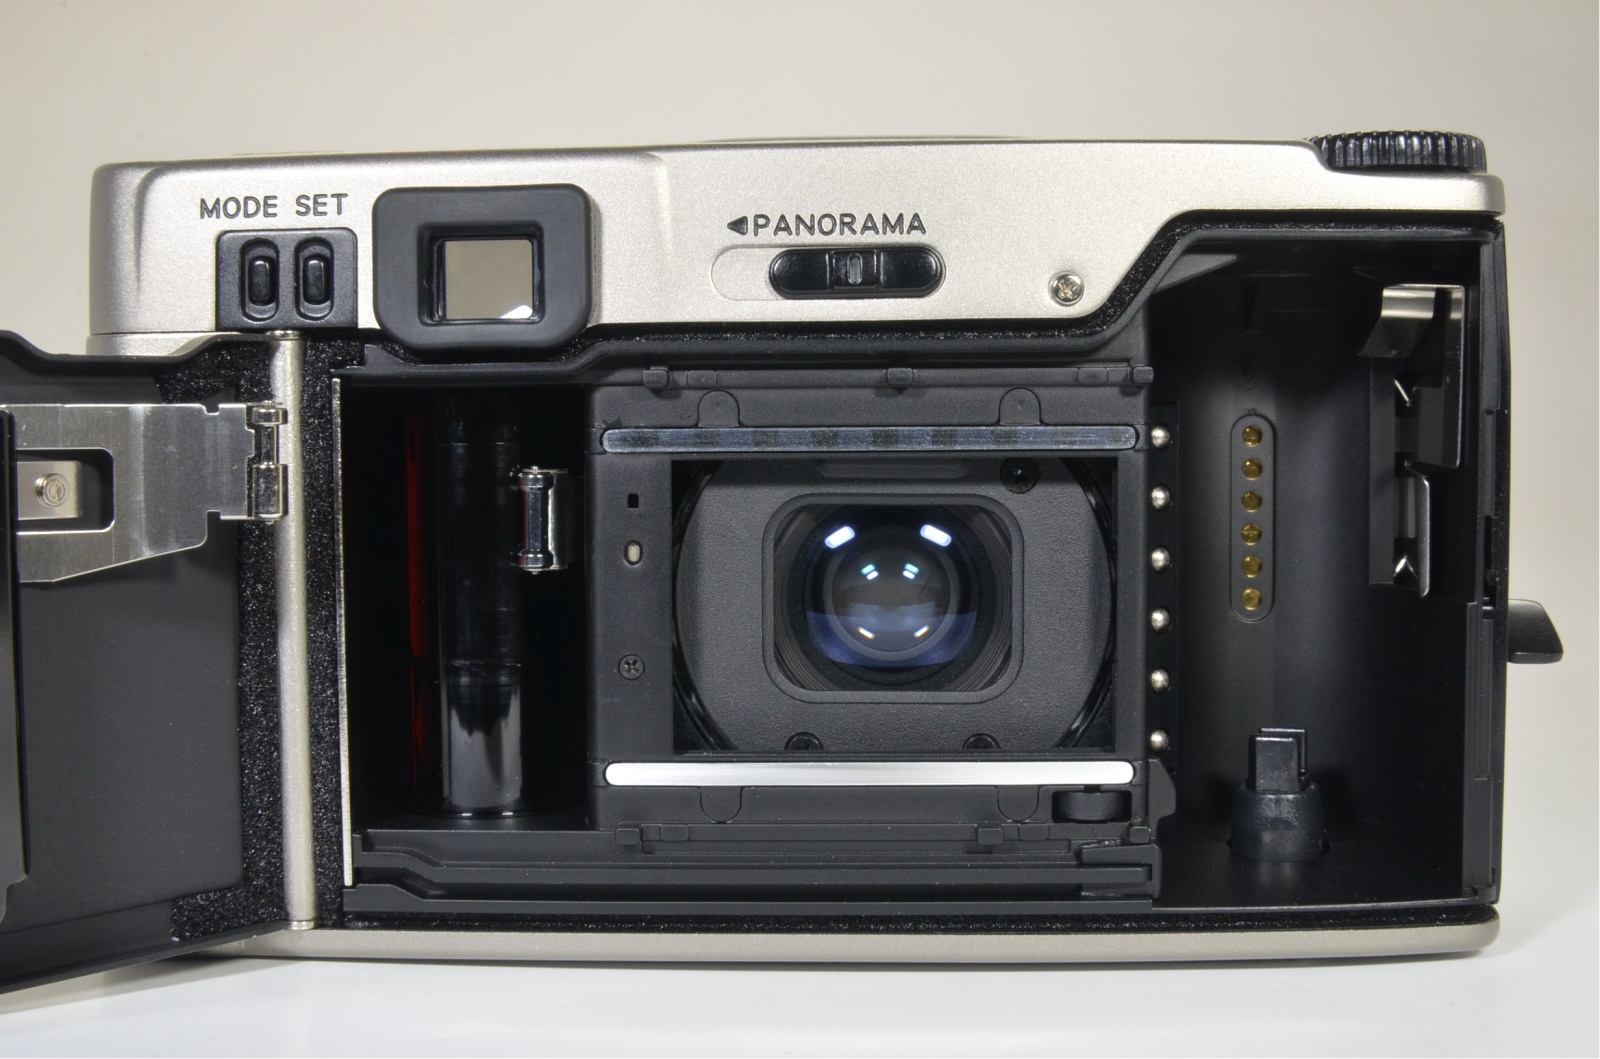 nikon 35ti p&s film camera lens 35mm f2.8 from japan film tested